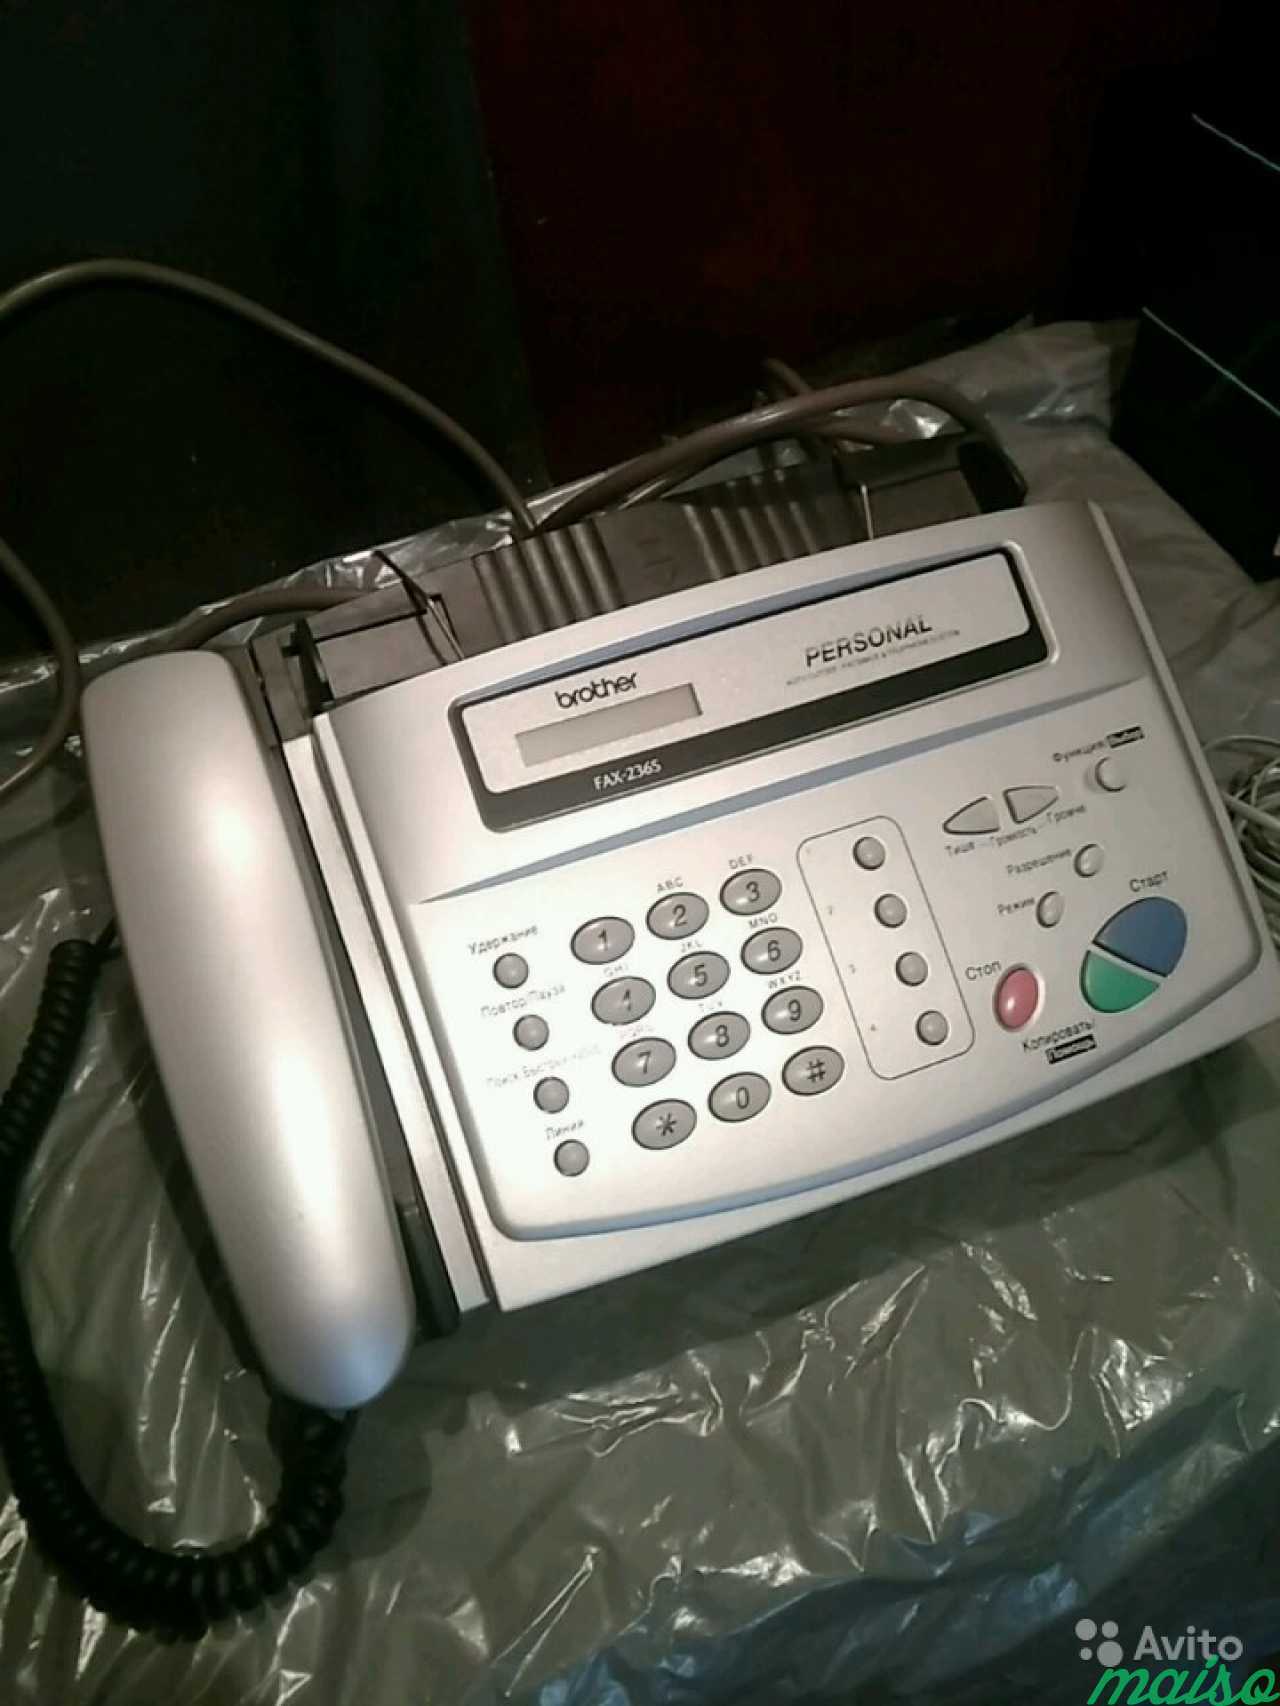 Факс brother Fax-236s. Факс brother 236 10/09 г. фото. Телефон brother Fax 236s как перевоить номер. Телефон и факс Питера адрес.